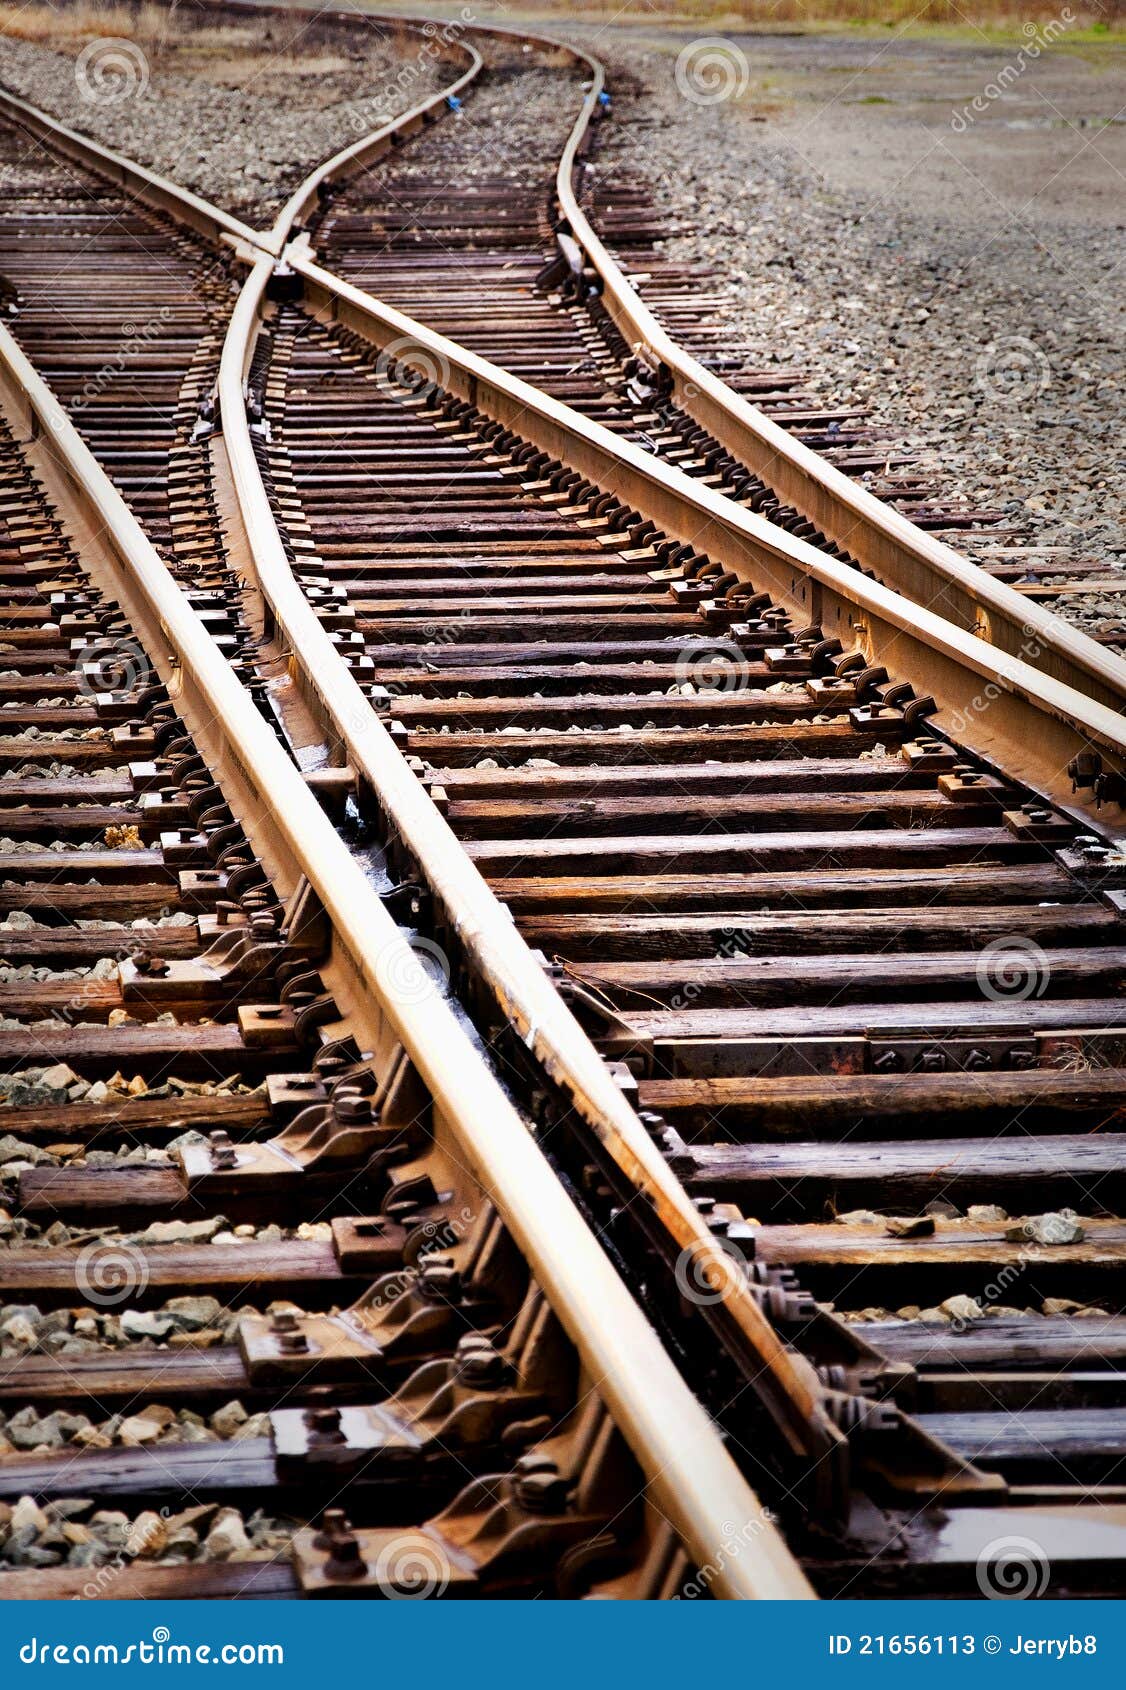 railroad track switch